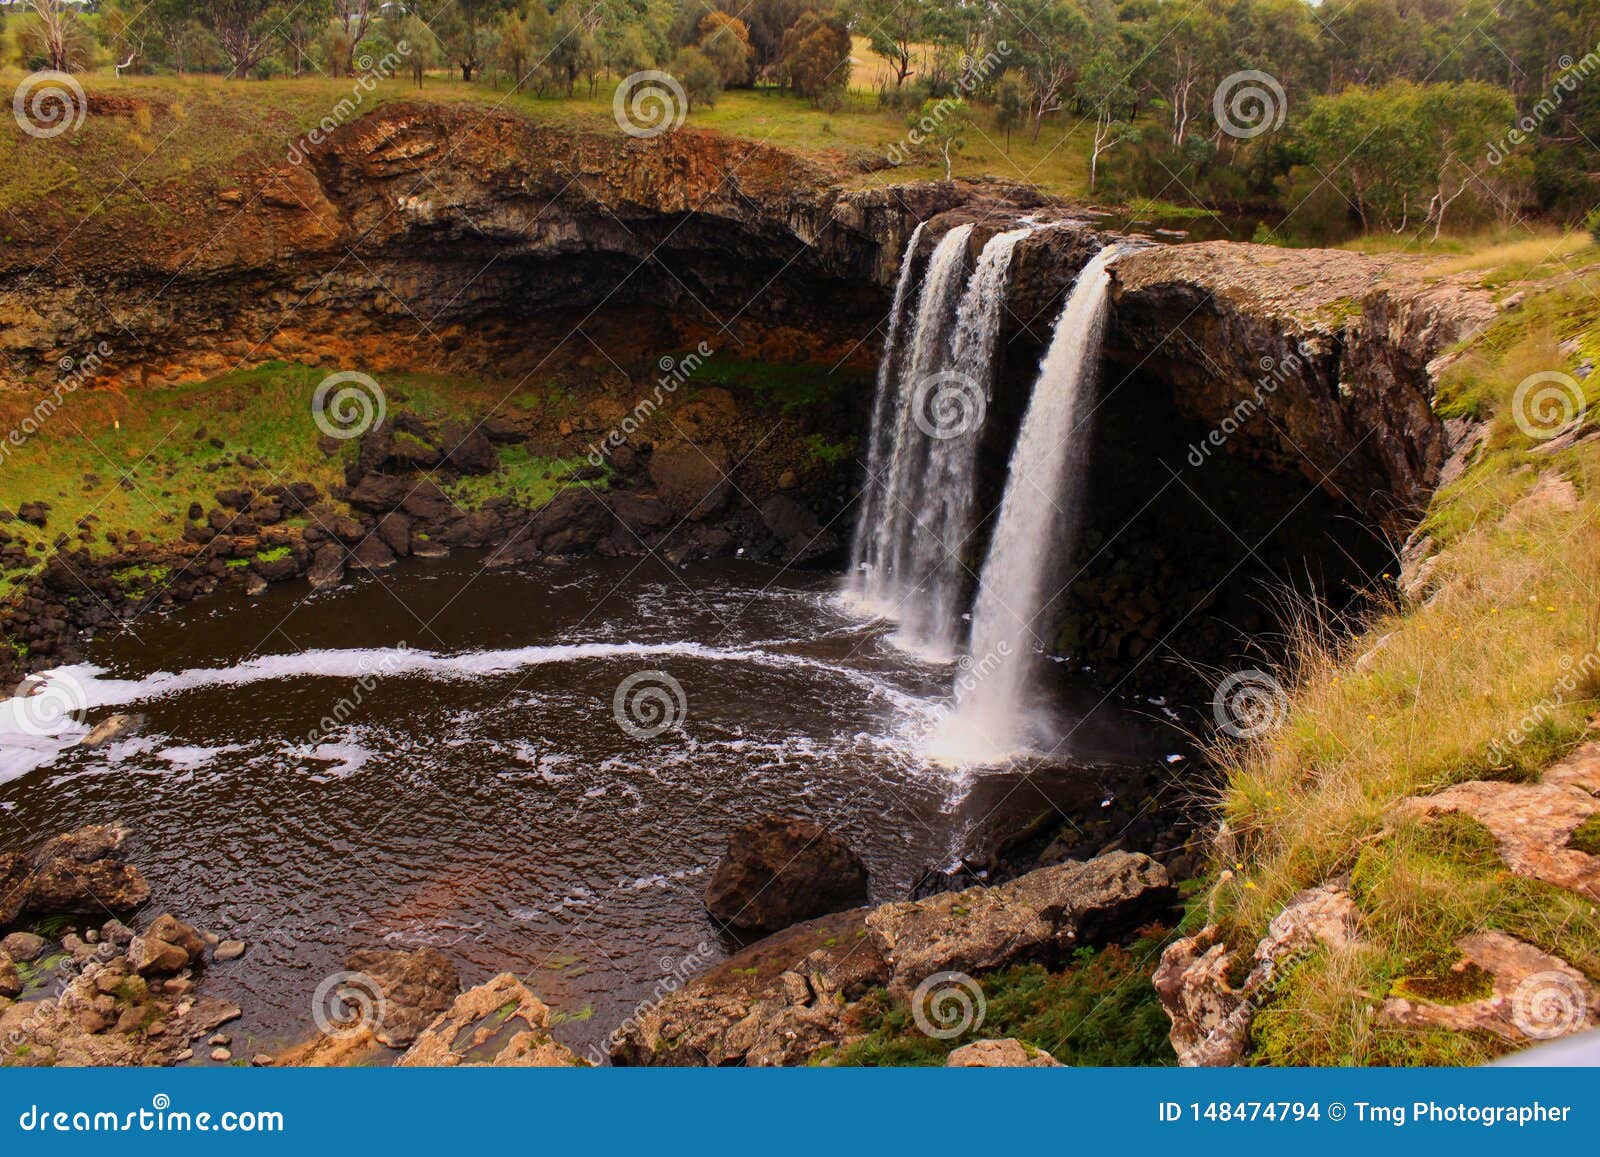 wannon-falls-in-hamilton-australia-stock-photo-image-of-australia